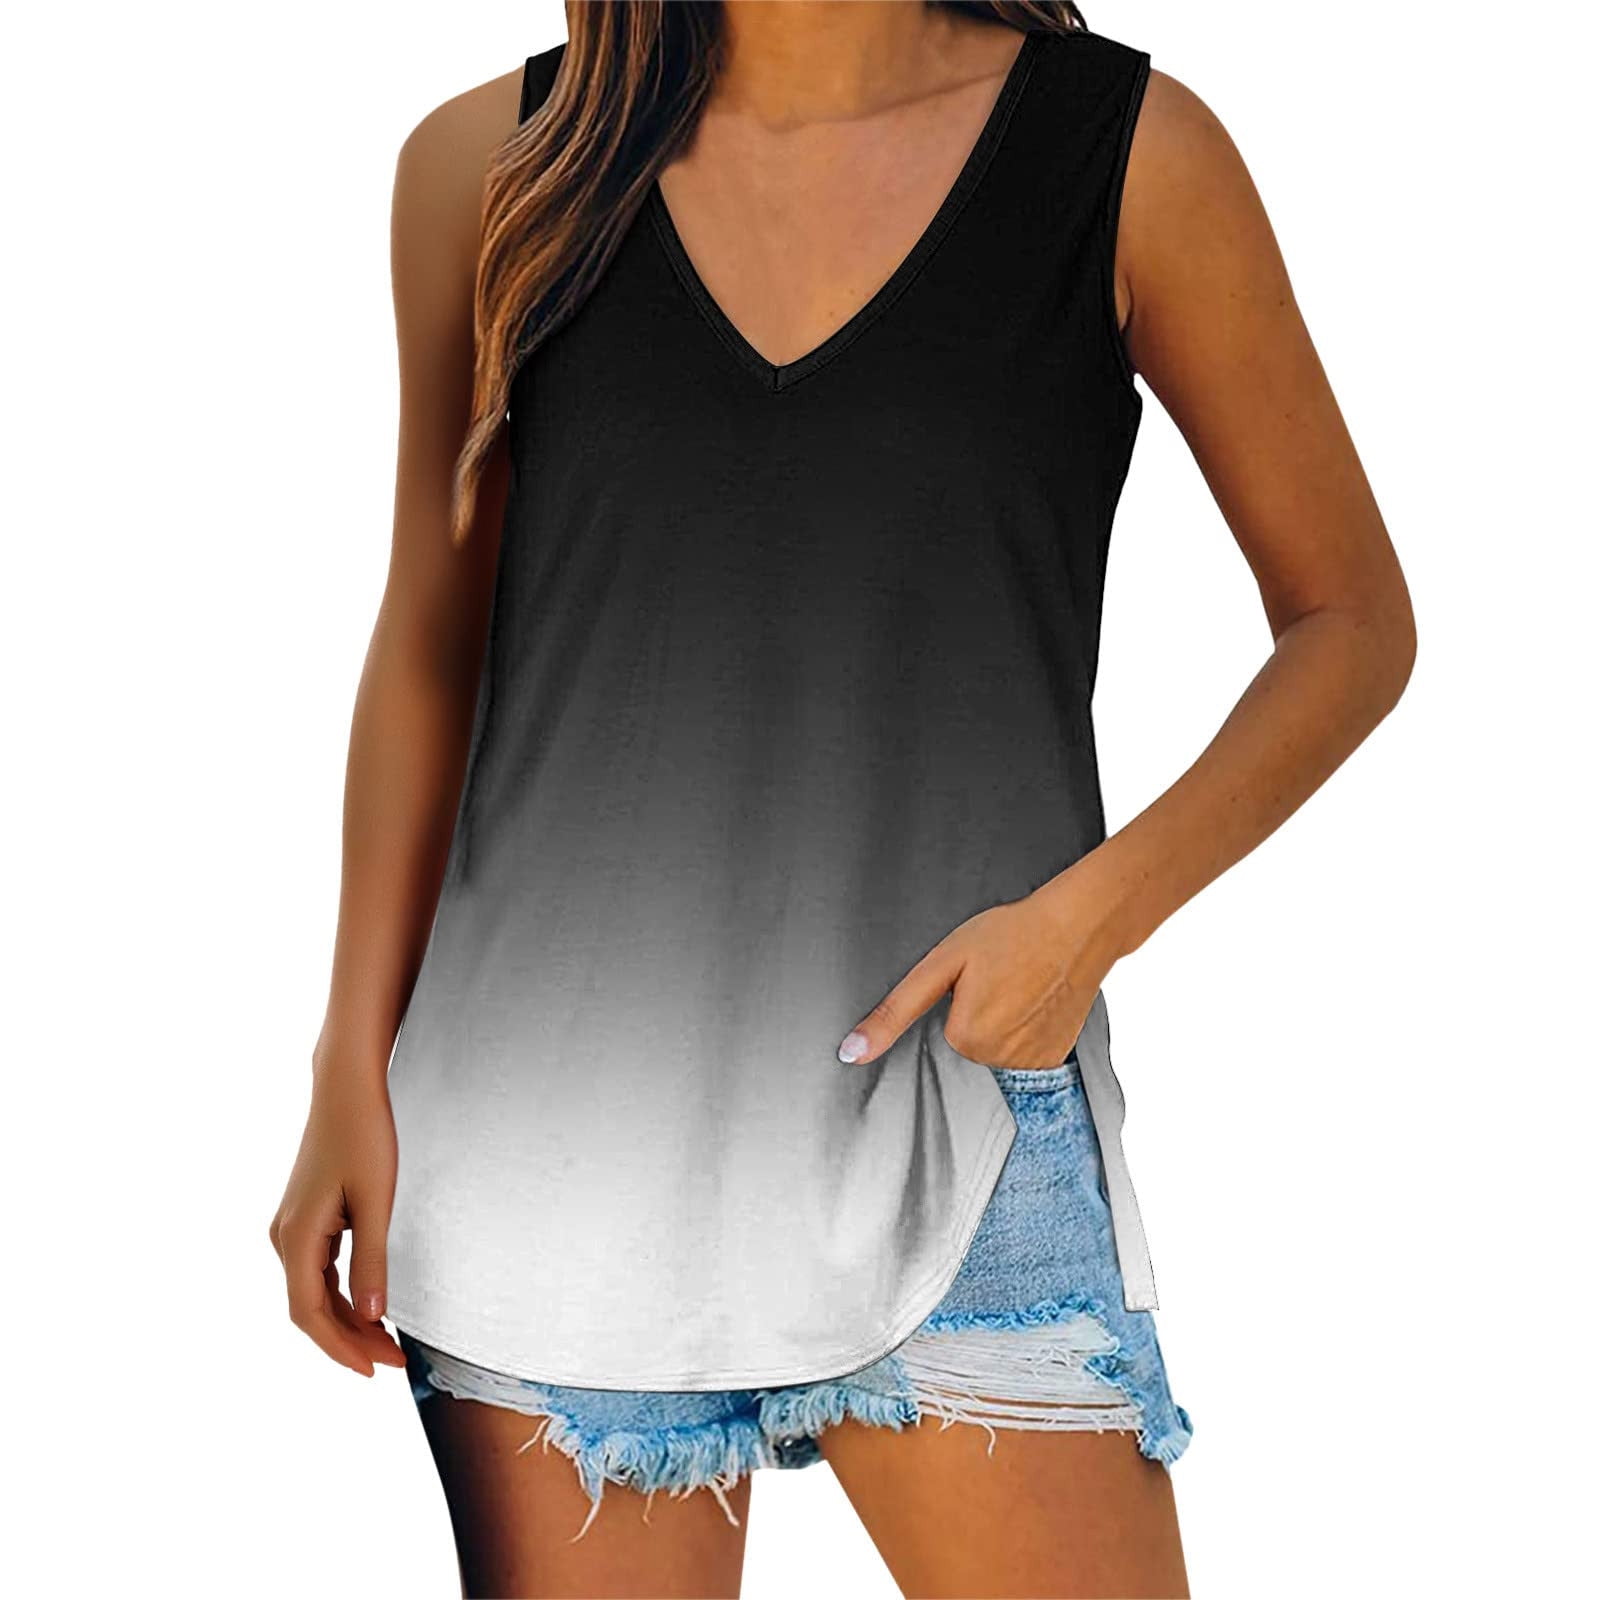 Blouses For Women Blouse Camisole Summer Clothing Vest T-Shirt Women'S Tops YI 